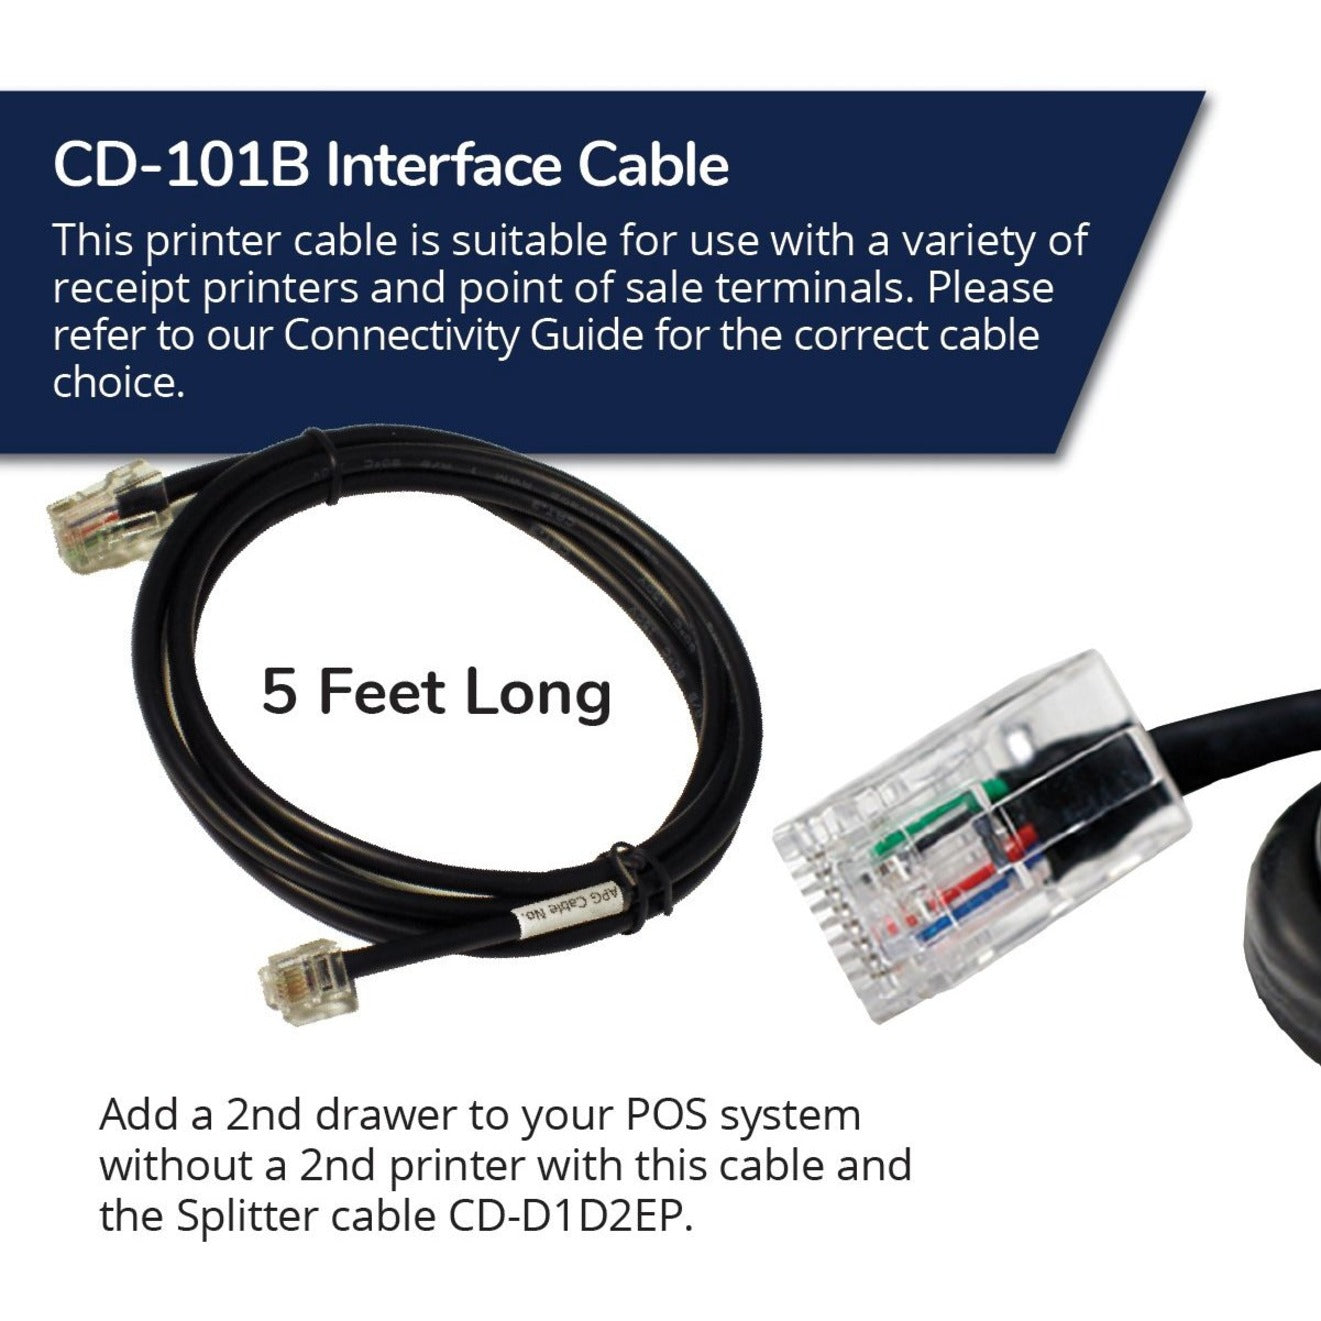 apg CD-101B RJ-12/RJ-45 Data Transfer Cable, 5 ft, POS Terminal, Printer, Cash Drawer